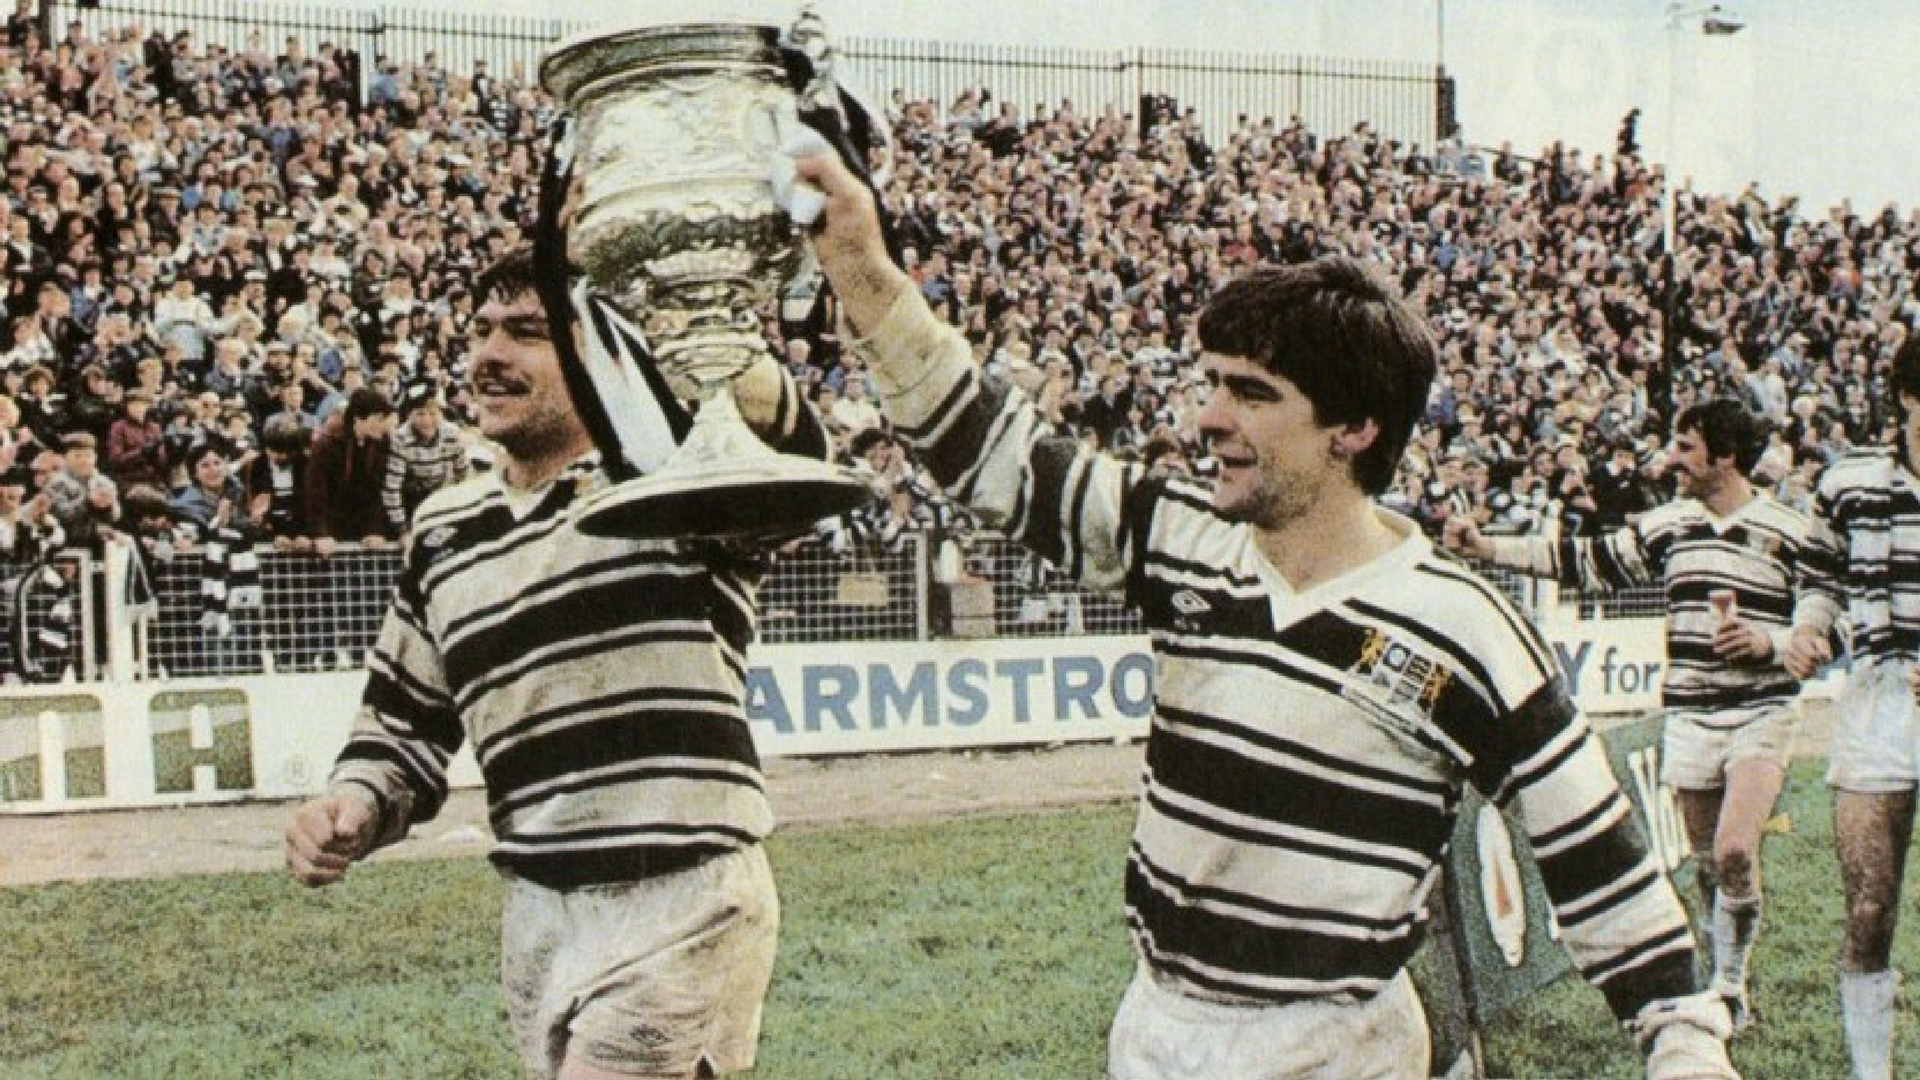 Hull were last crowned league title winners in 1982/83.